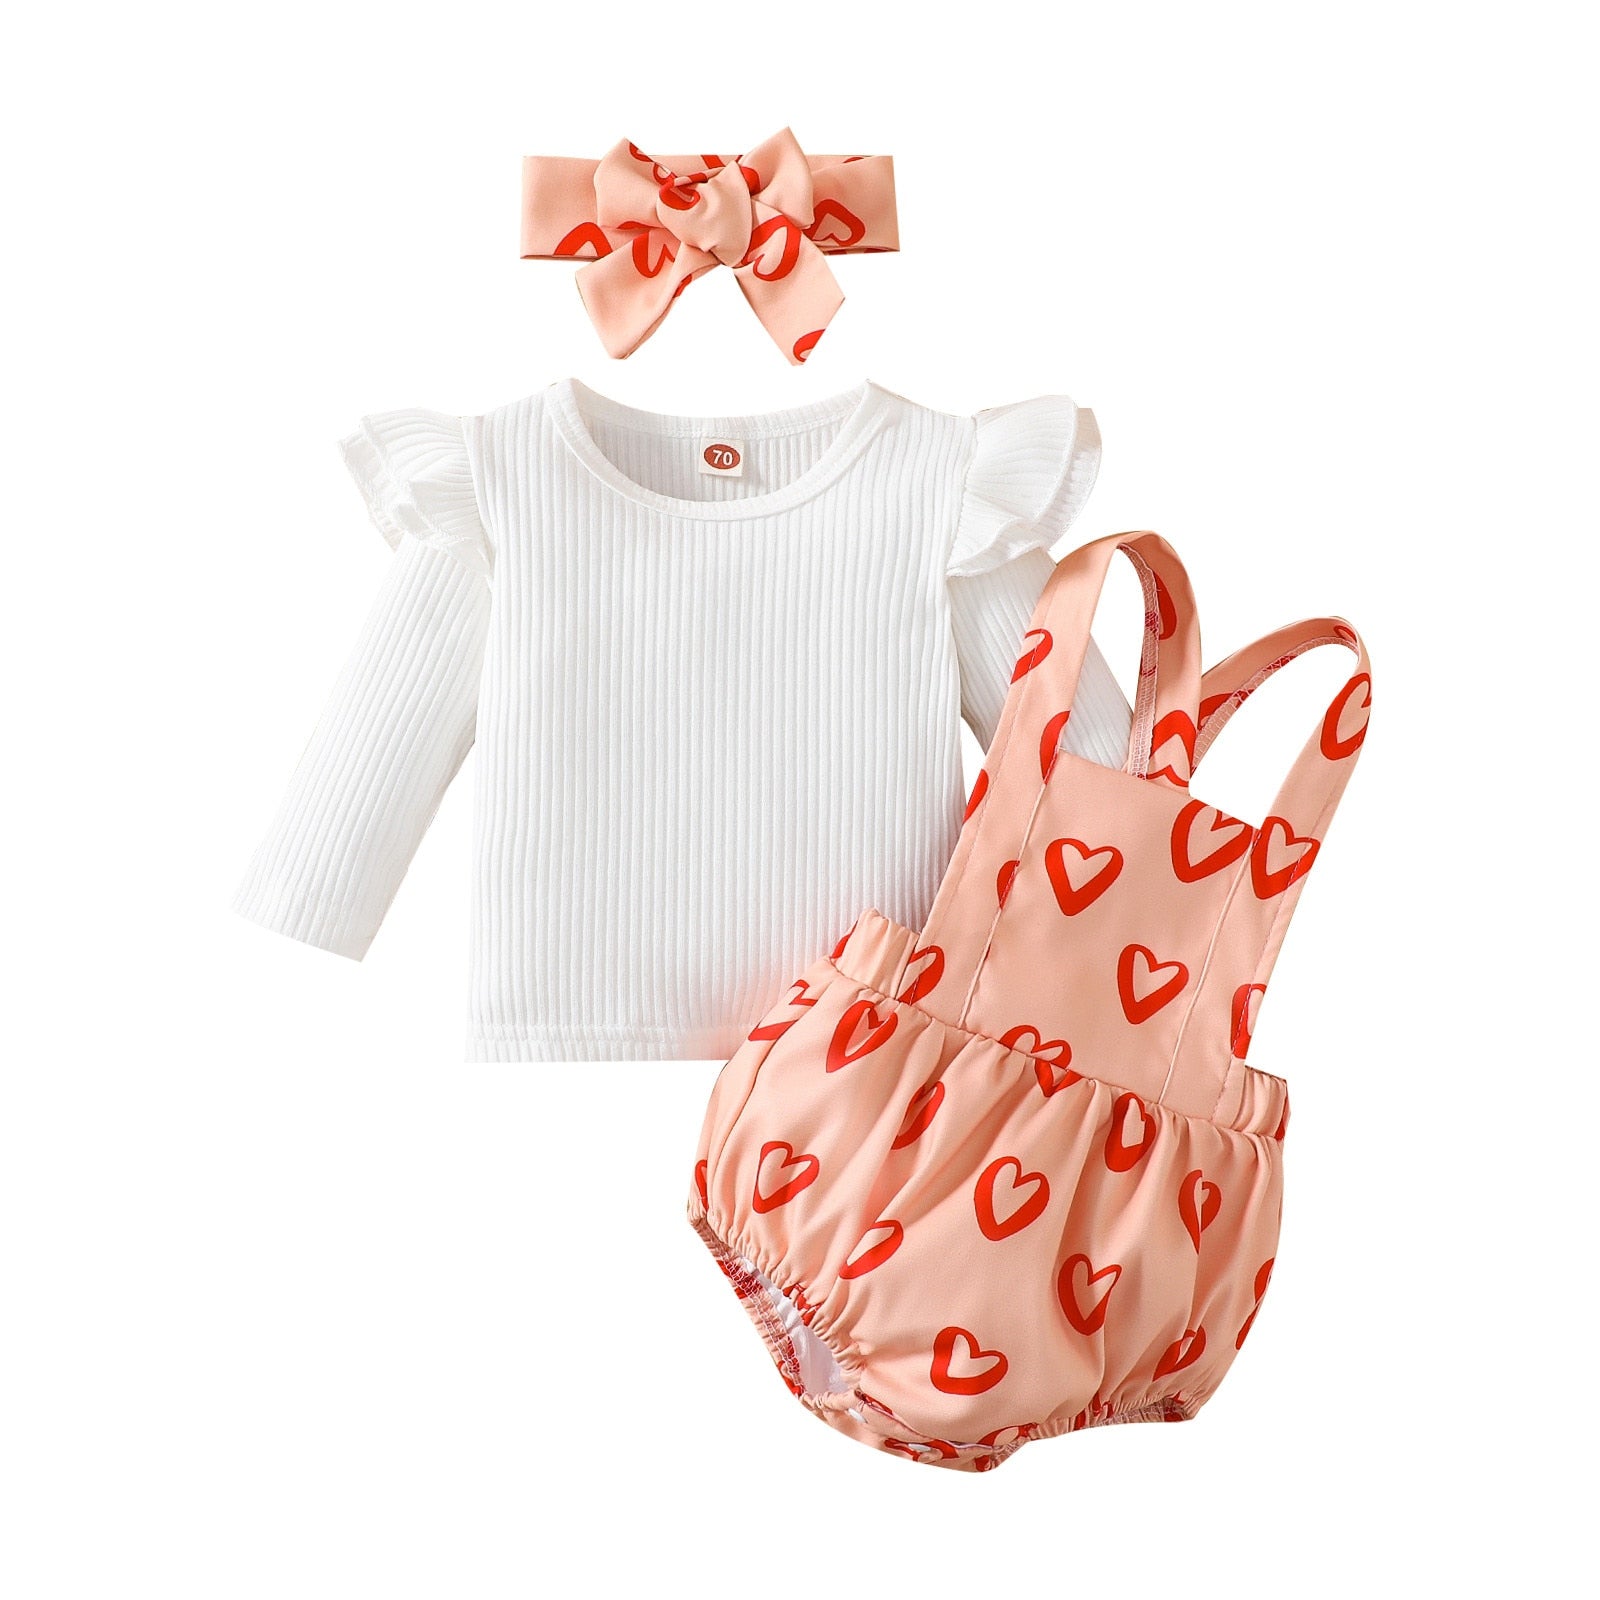 Valentine's Day Infant Baby Girls Clothes Sets - Ruffled Sleeve Tops, Love Print Shorts, Headband